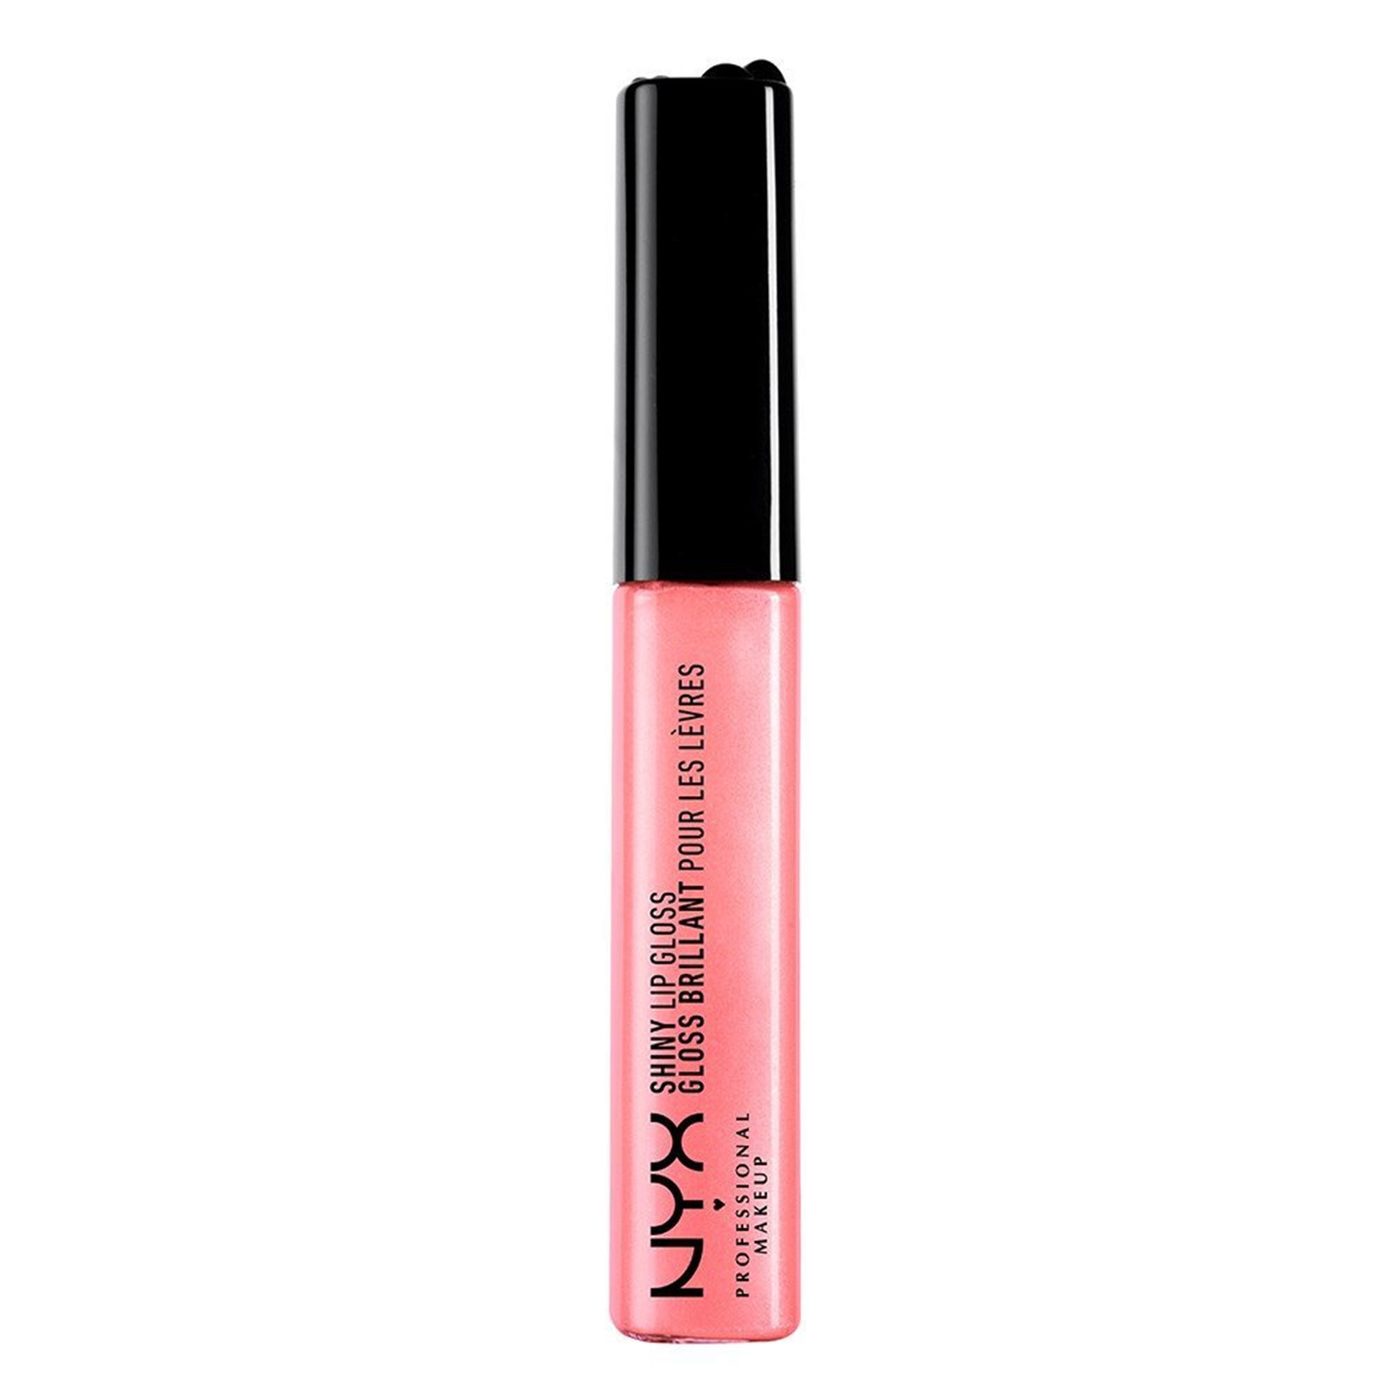 NYX Mega Shine Lip Gloss, Peach - Nude Peach - 0.37 fl oz 